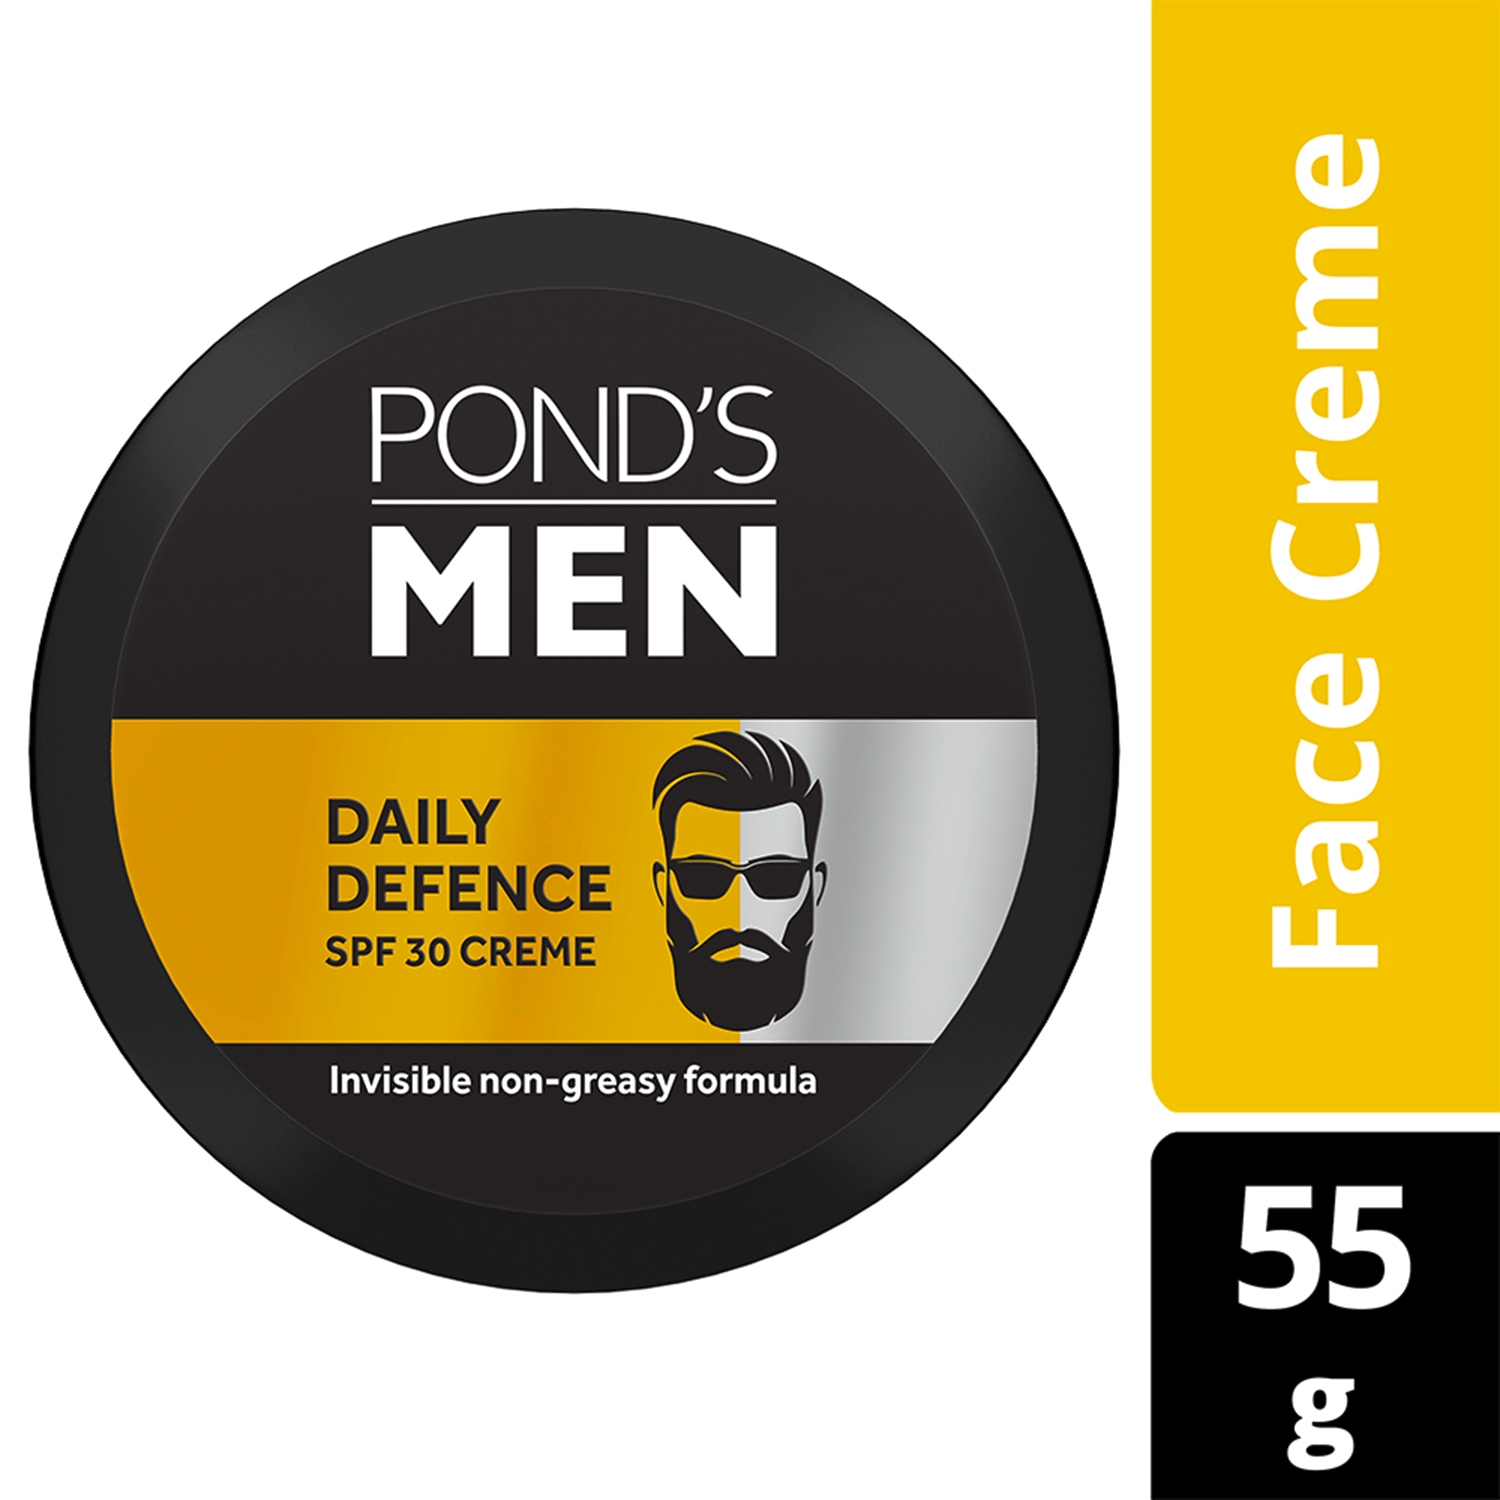 Pond's | Pond's Men Daily Defence SPF 30 Face Cream - (55g)